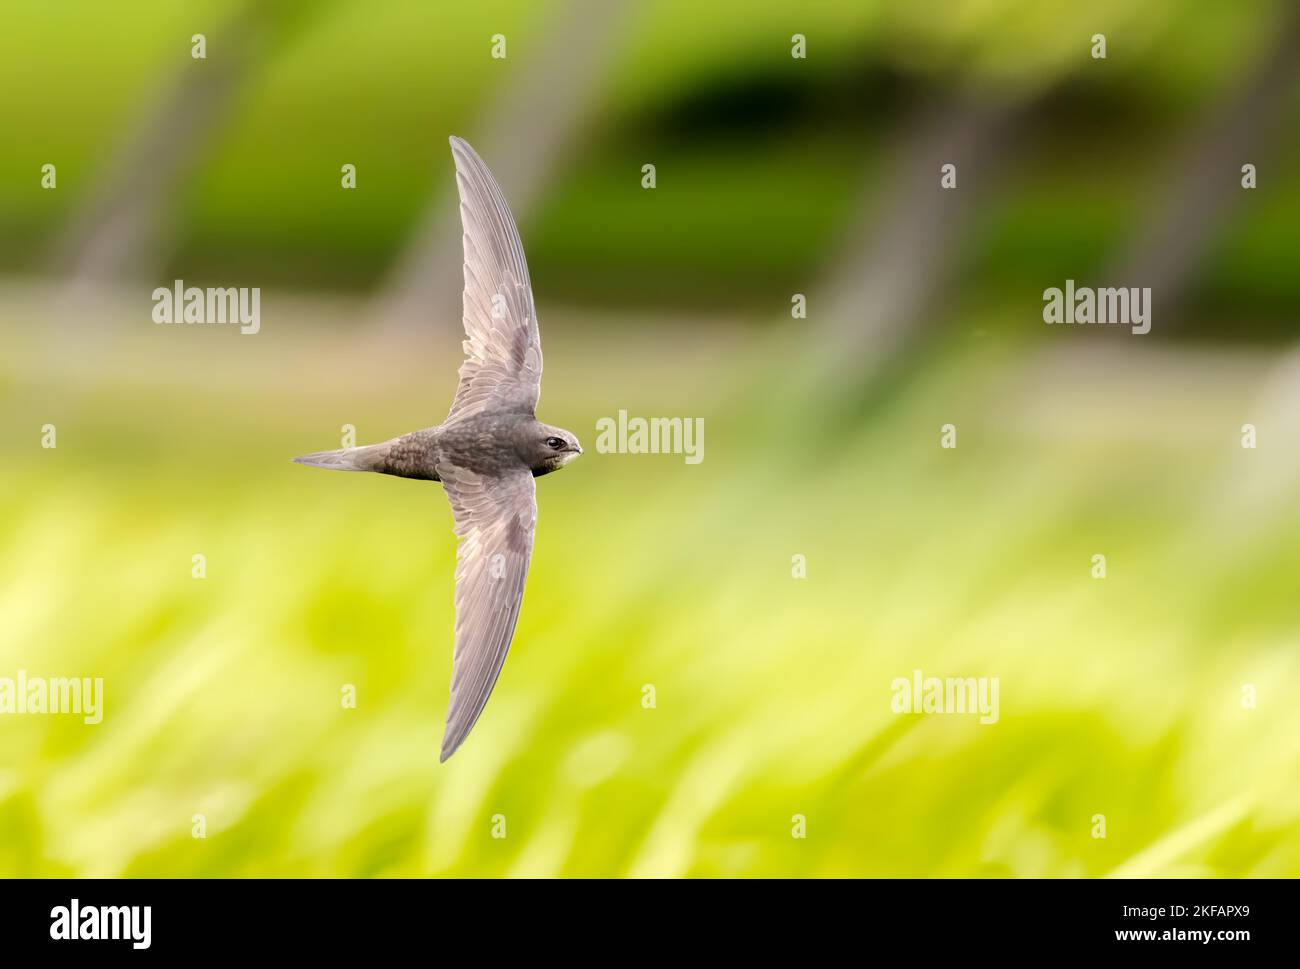 Common swift in flight over grass Stock Photo